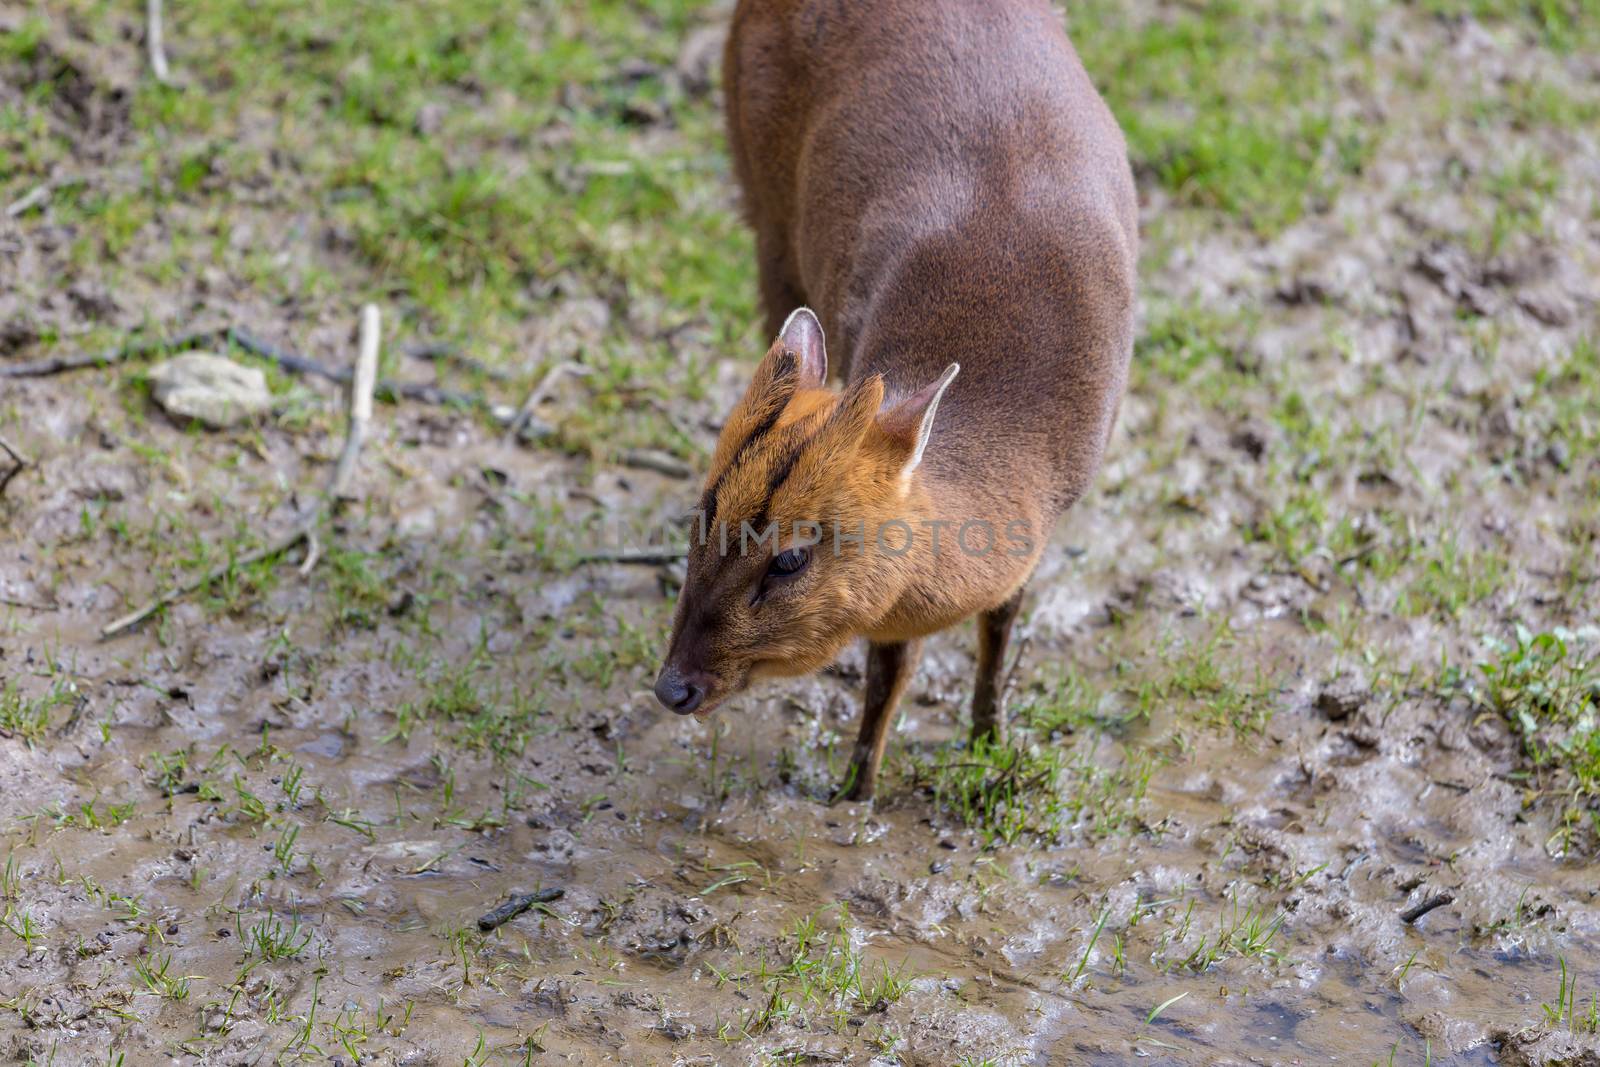 Adult female Reeve's Muntjac Deer (Muntiacus reevesi) at the British Wildlife Centre, Surrey, England. Introduced species